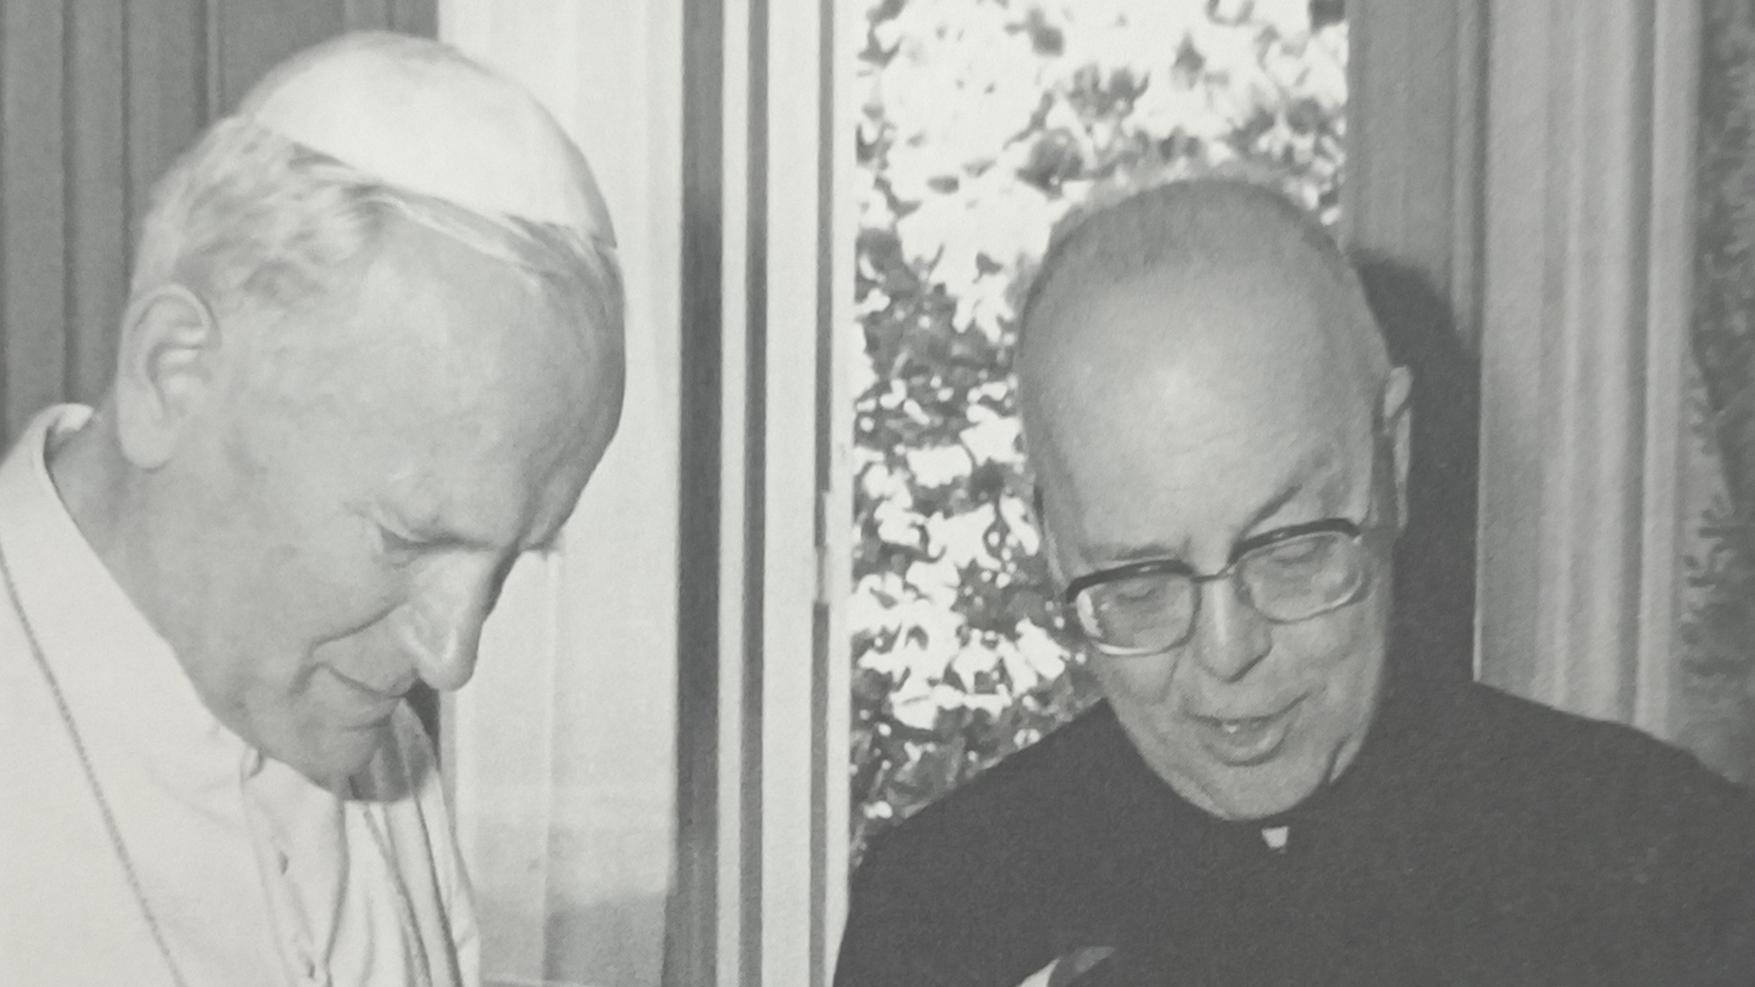 Pope John Paul II (left) and Father Amorth